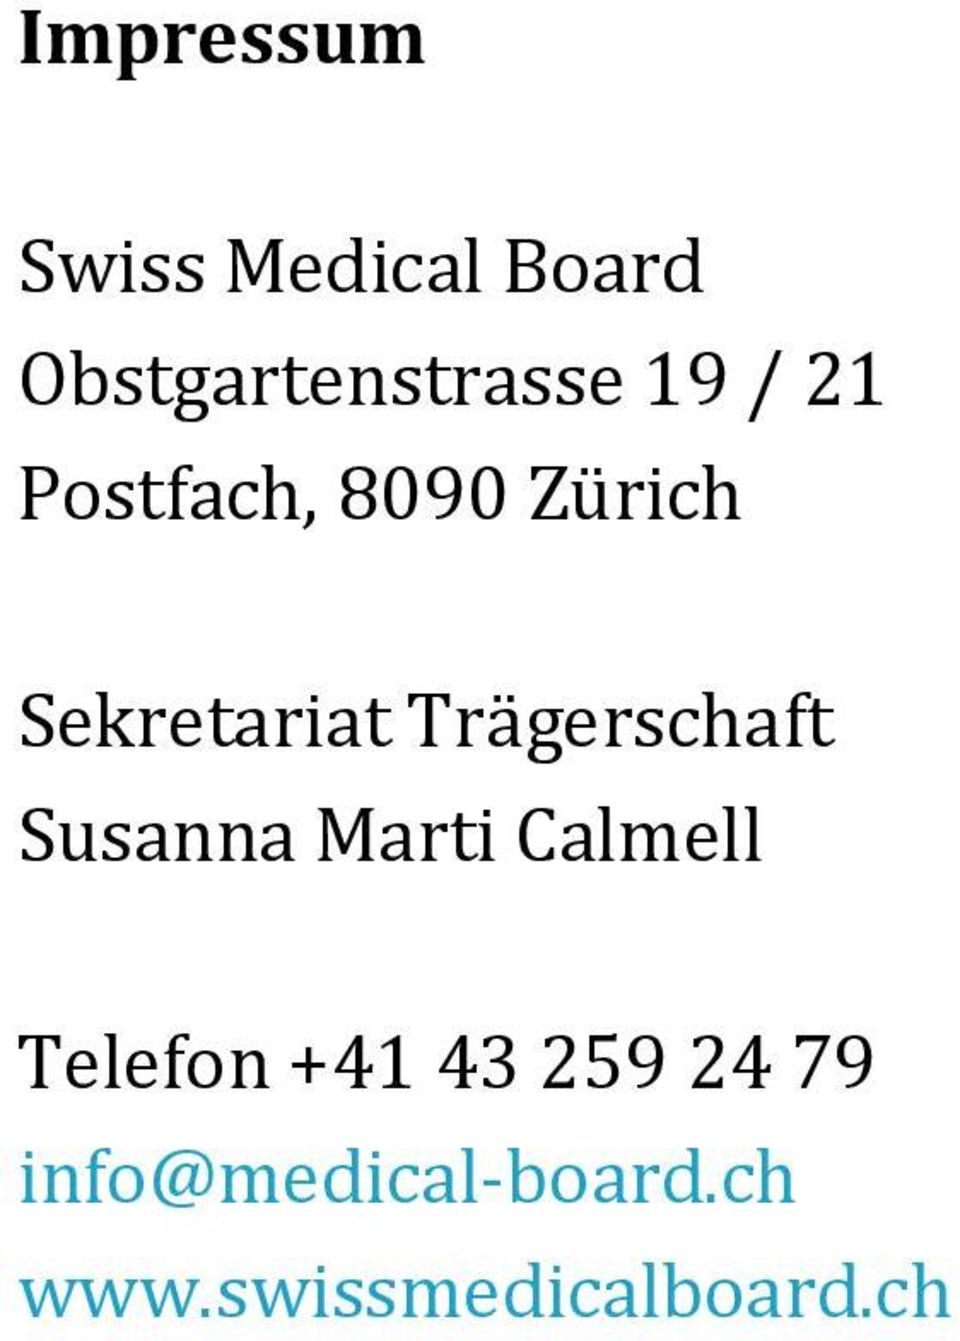 Susanna Marti Calmell Telefon +41 43 259 24 79